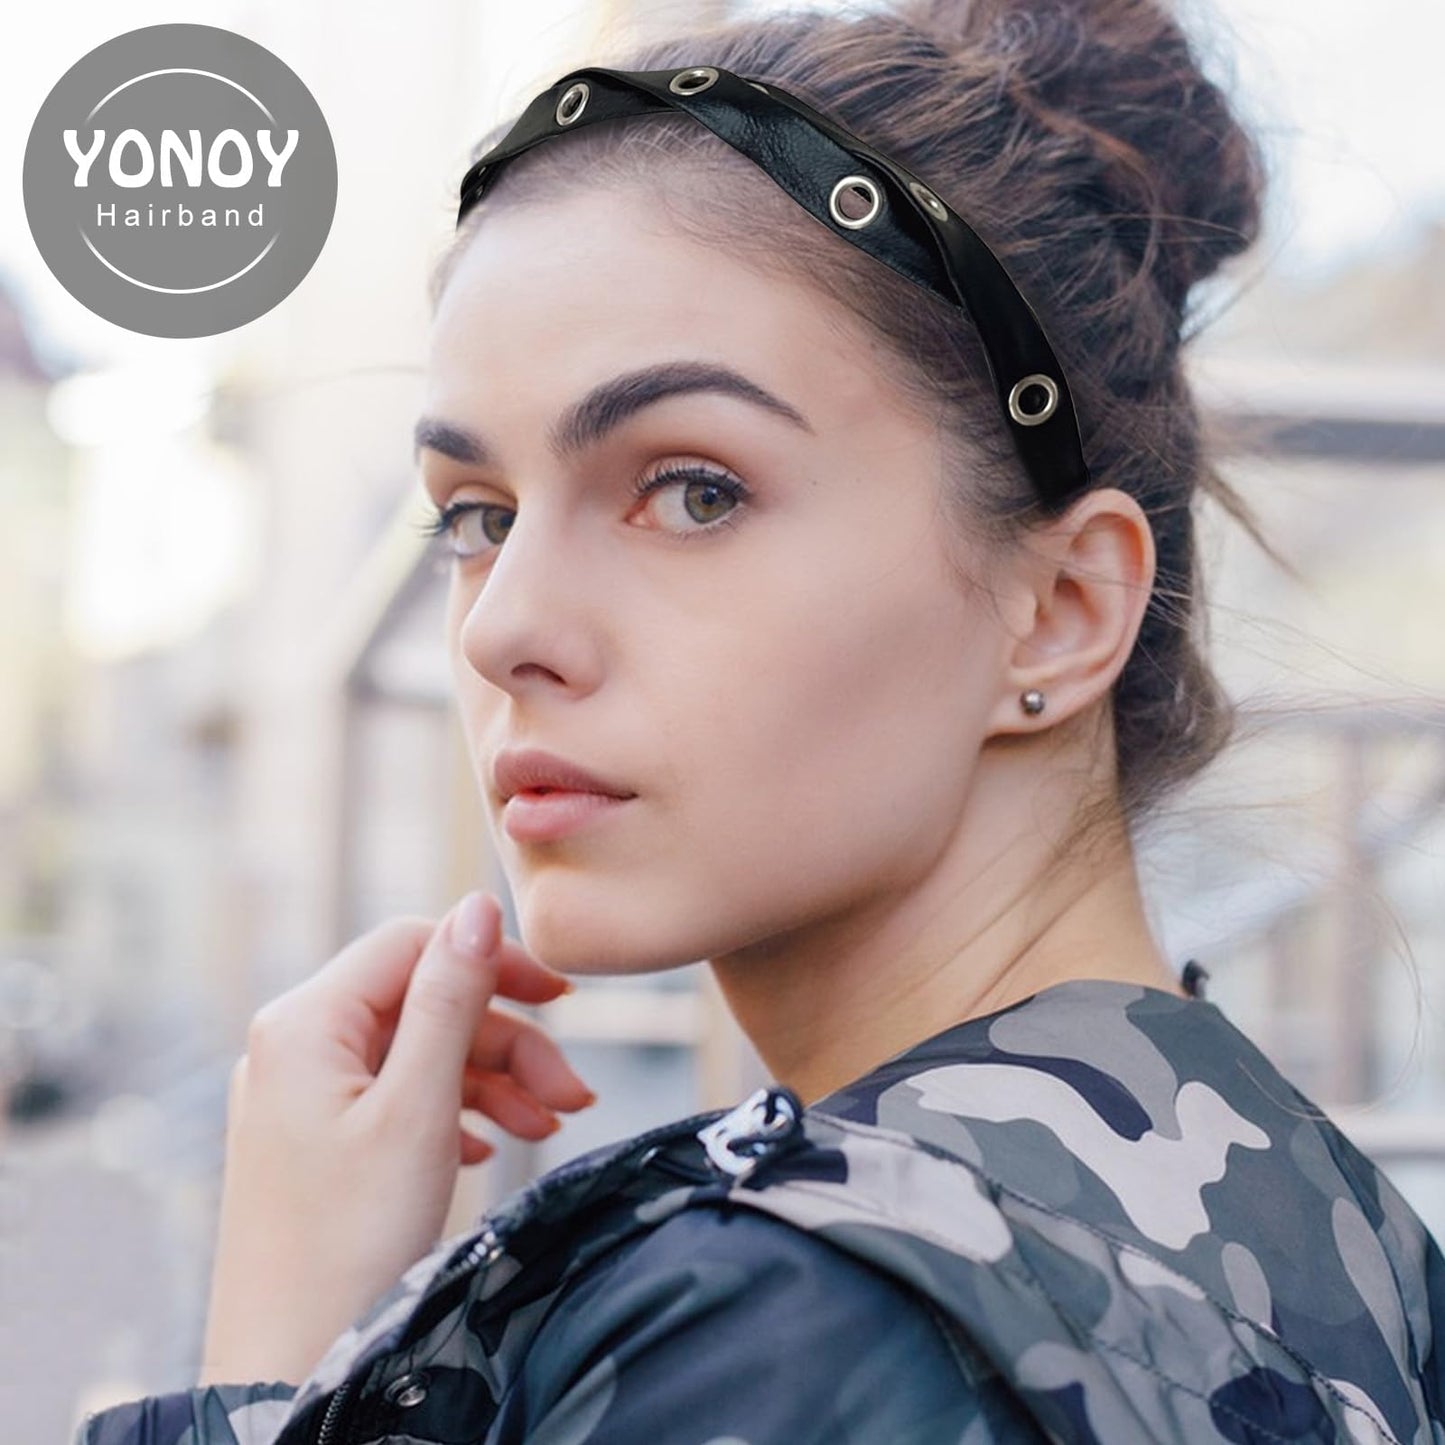 YONOY 3 Pcs Thin Leather rivets Headbands for Cool Girl, Rock Punk Hairband Anti-Slip Head Bands for Girl’s Hair Fashion Kont Headband Black Headbands for Girl’s Hair Accessories